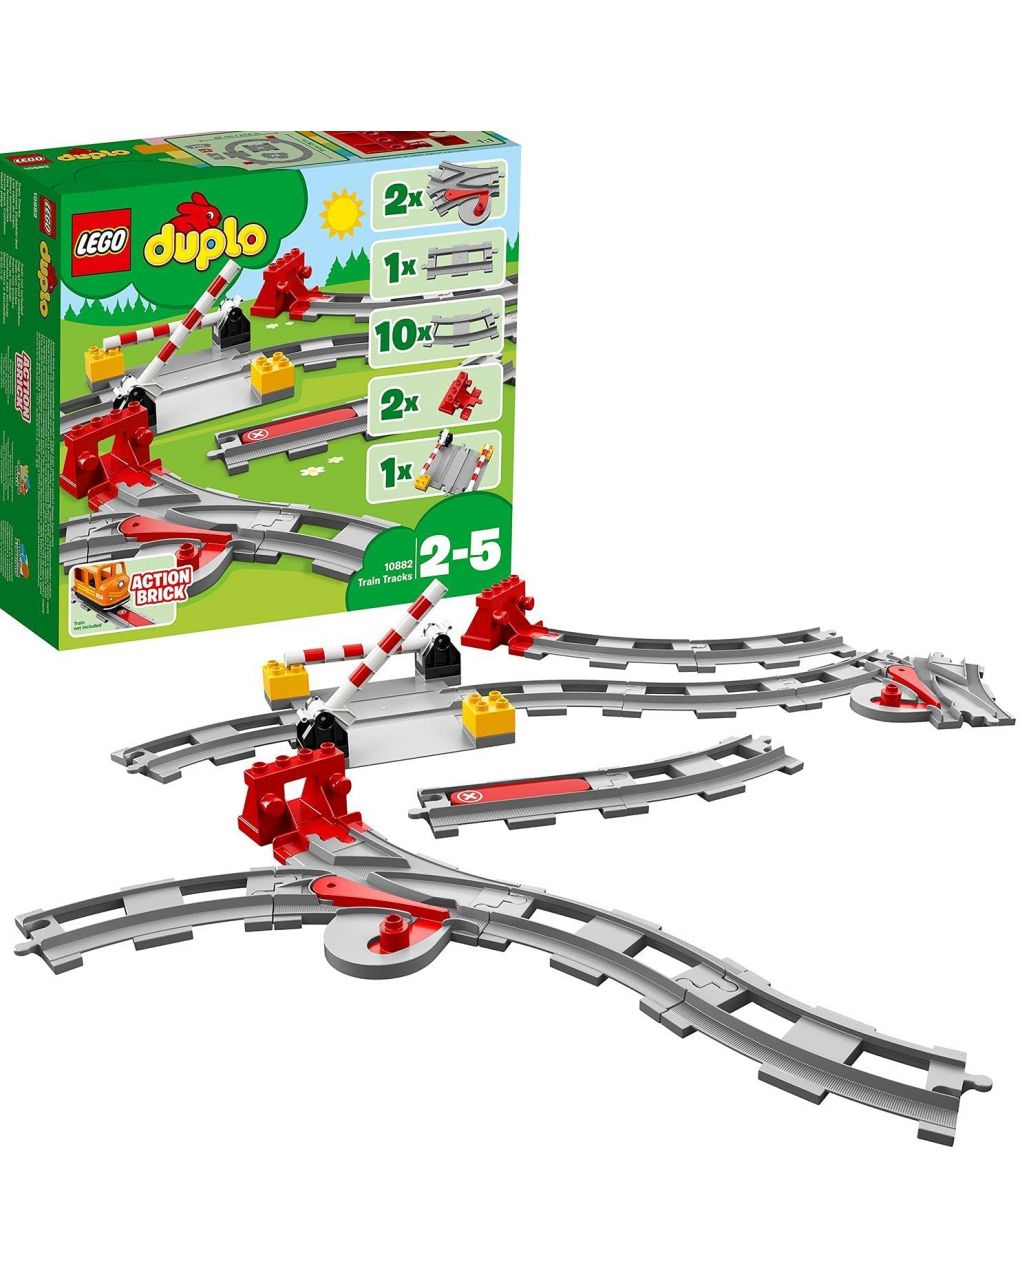 Lego duplo binari ferroviari - 10882 - LEGO Duplo